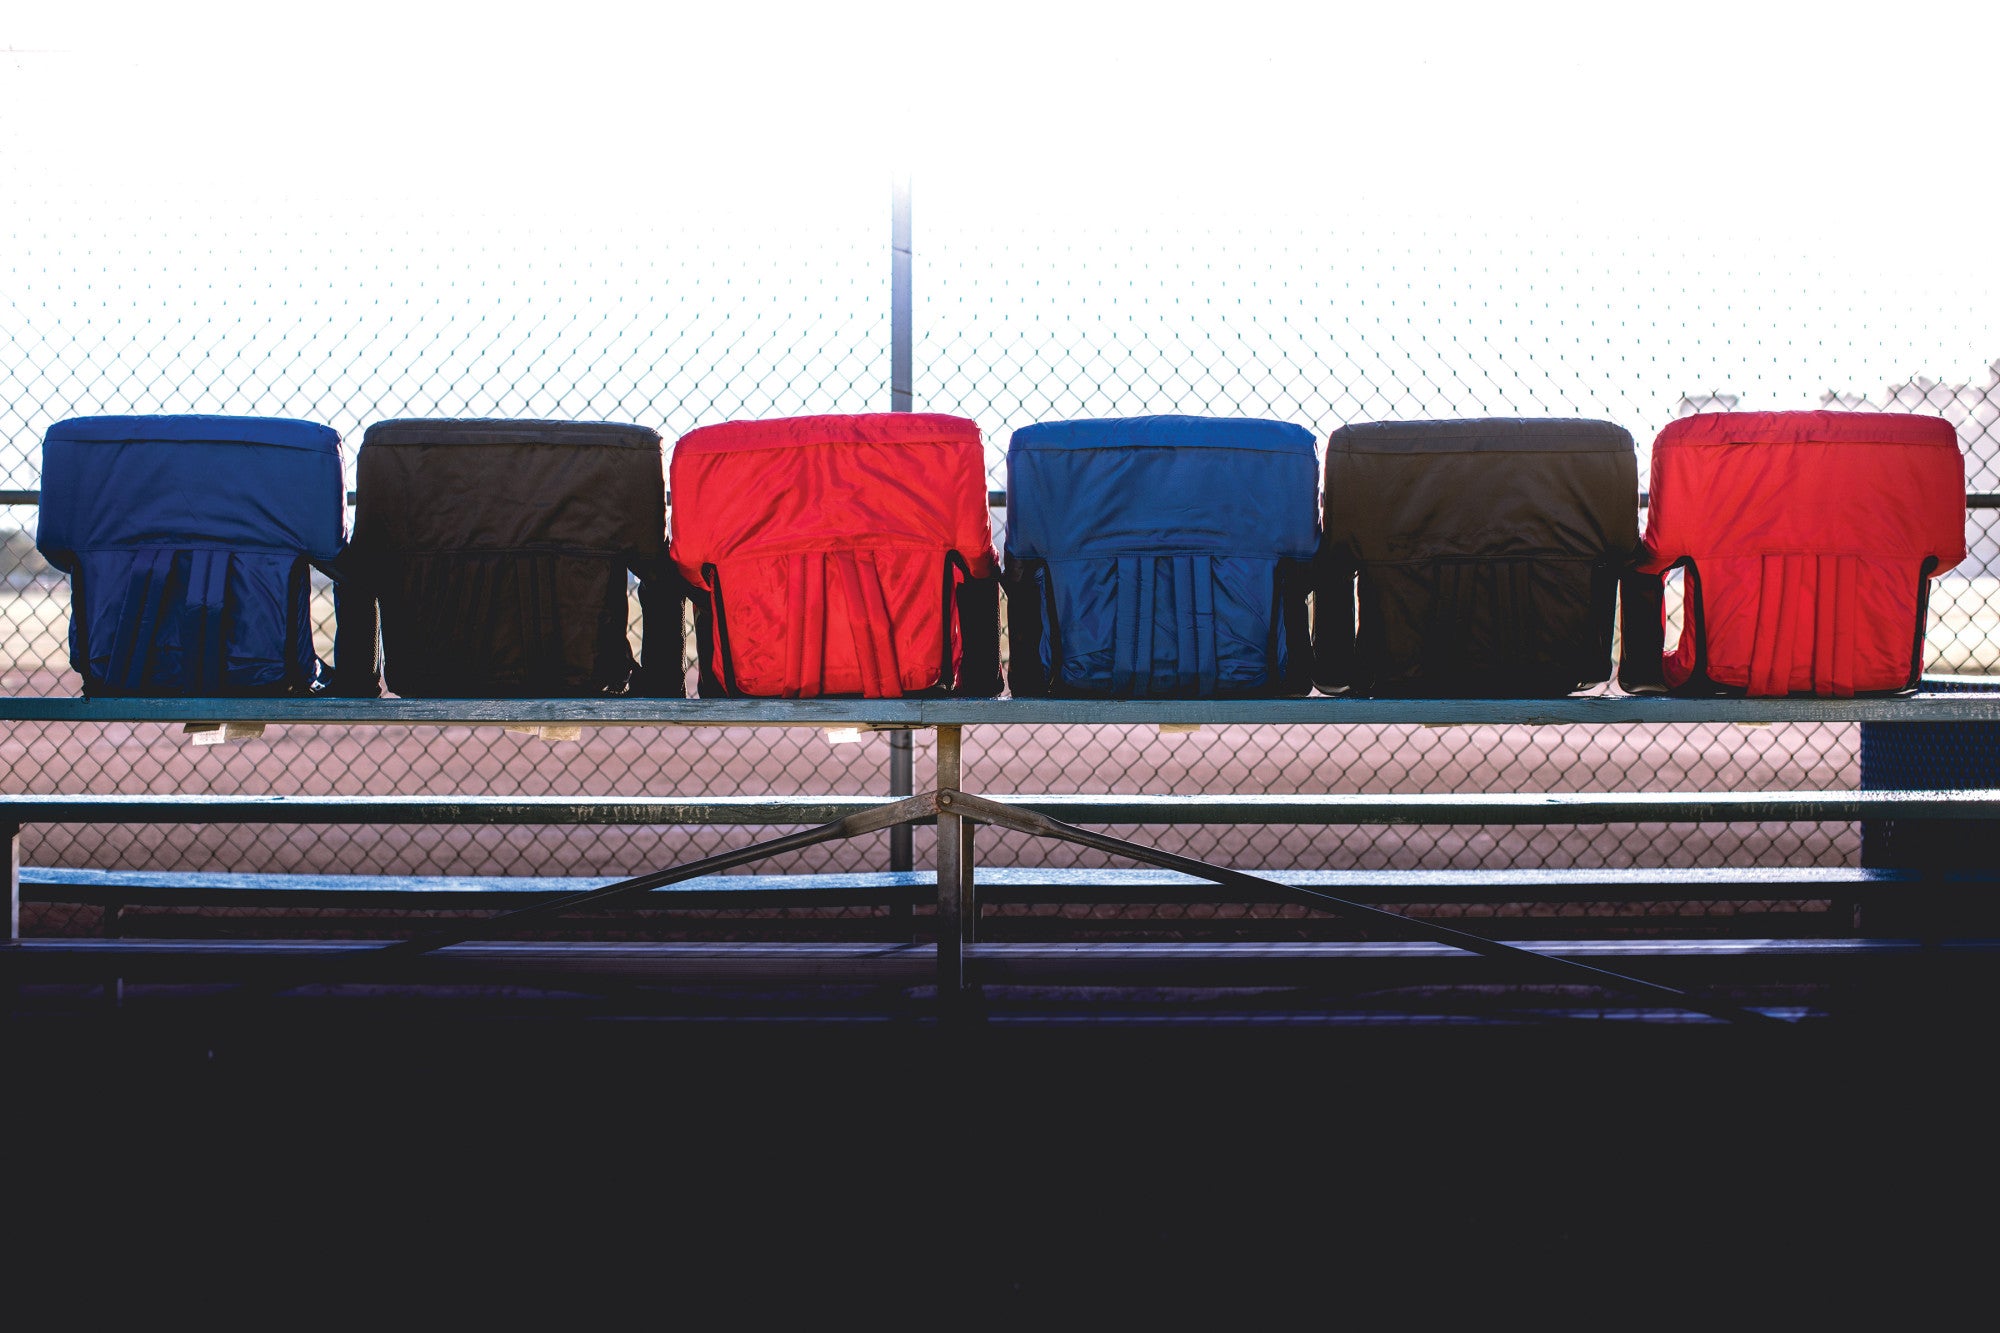 Atlanta Falcons - Ventura Portable Reclining Stadium Seat